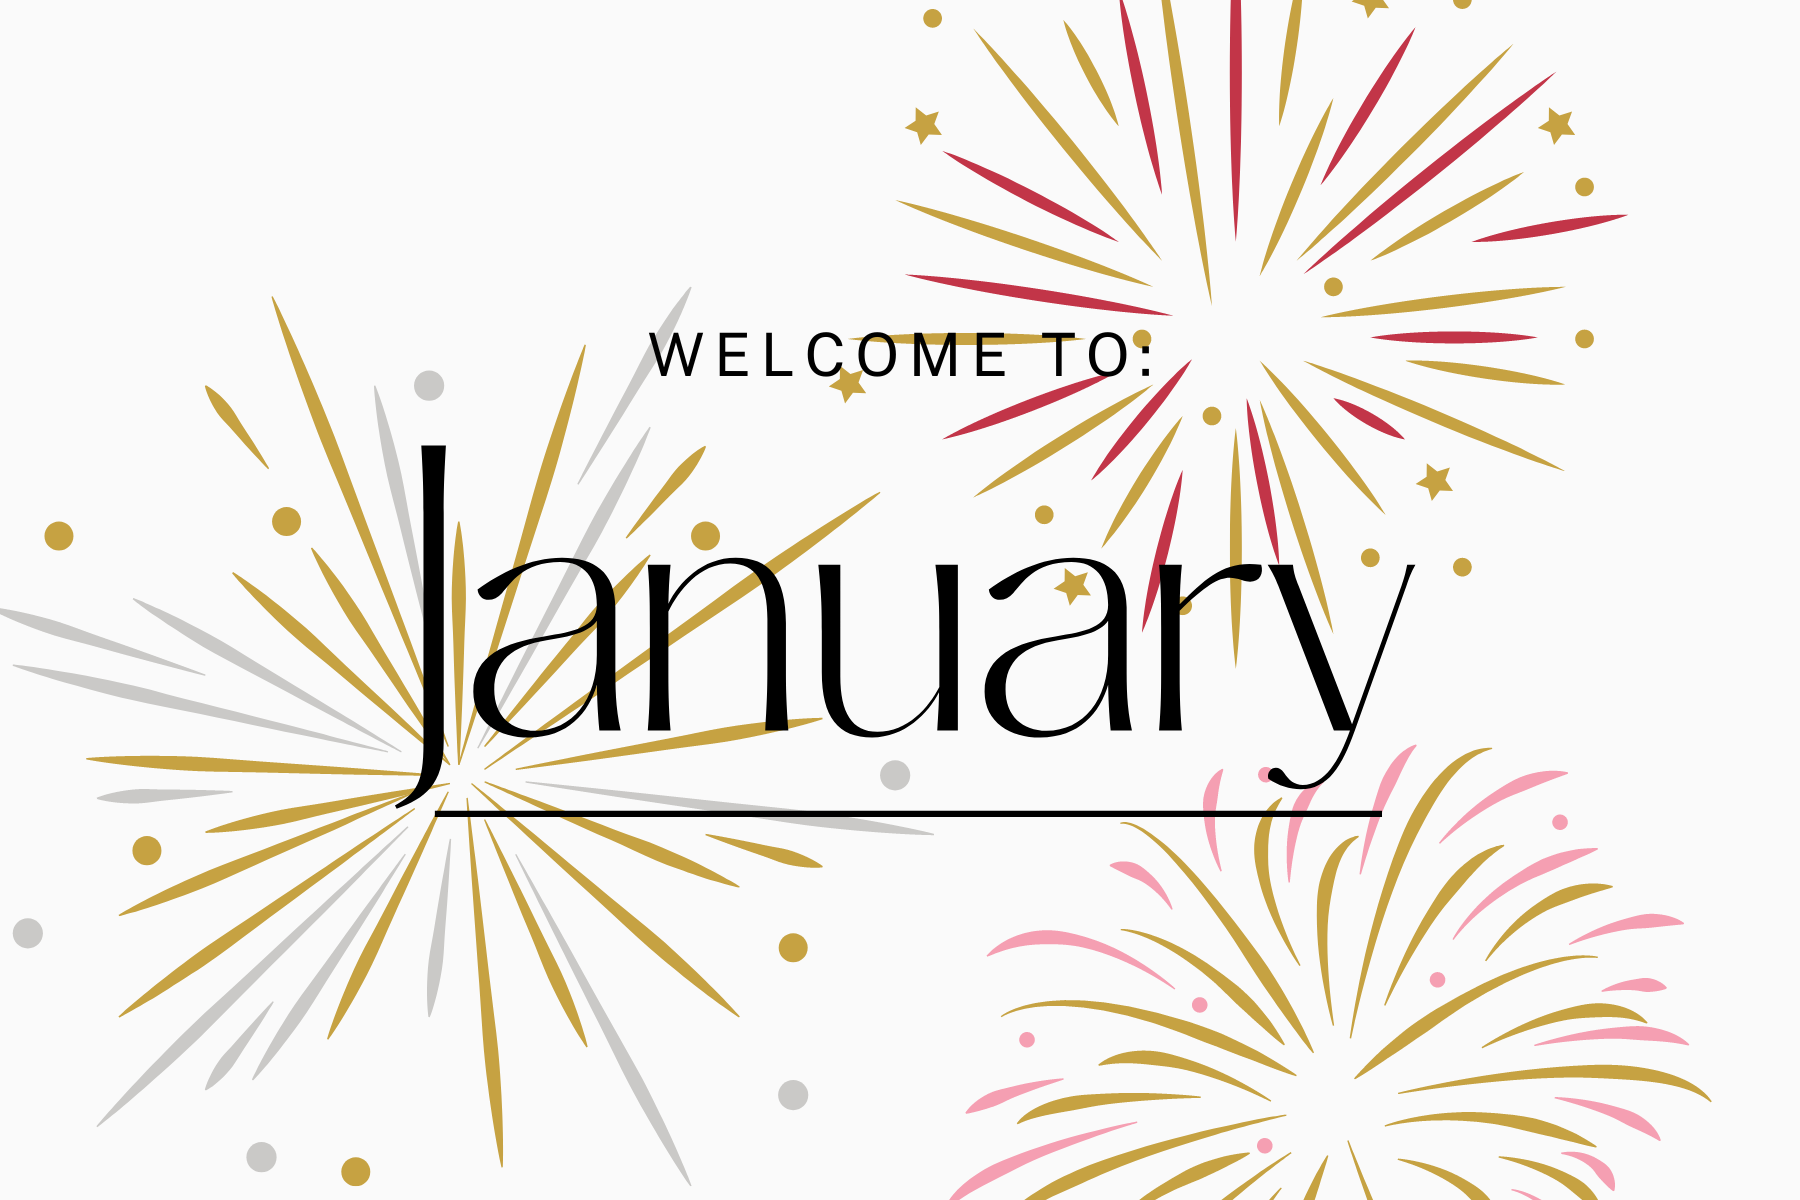 Welcome to January